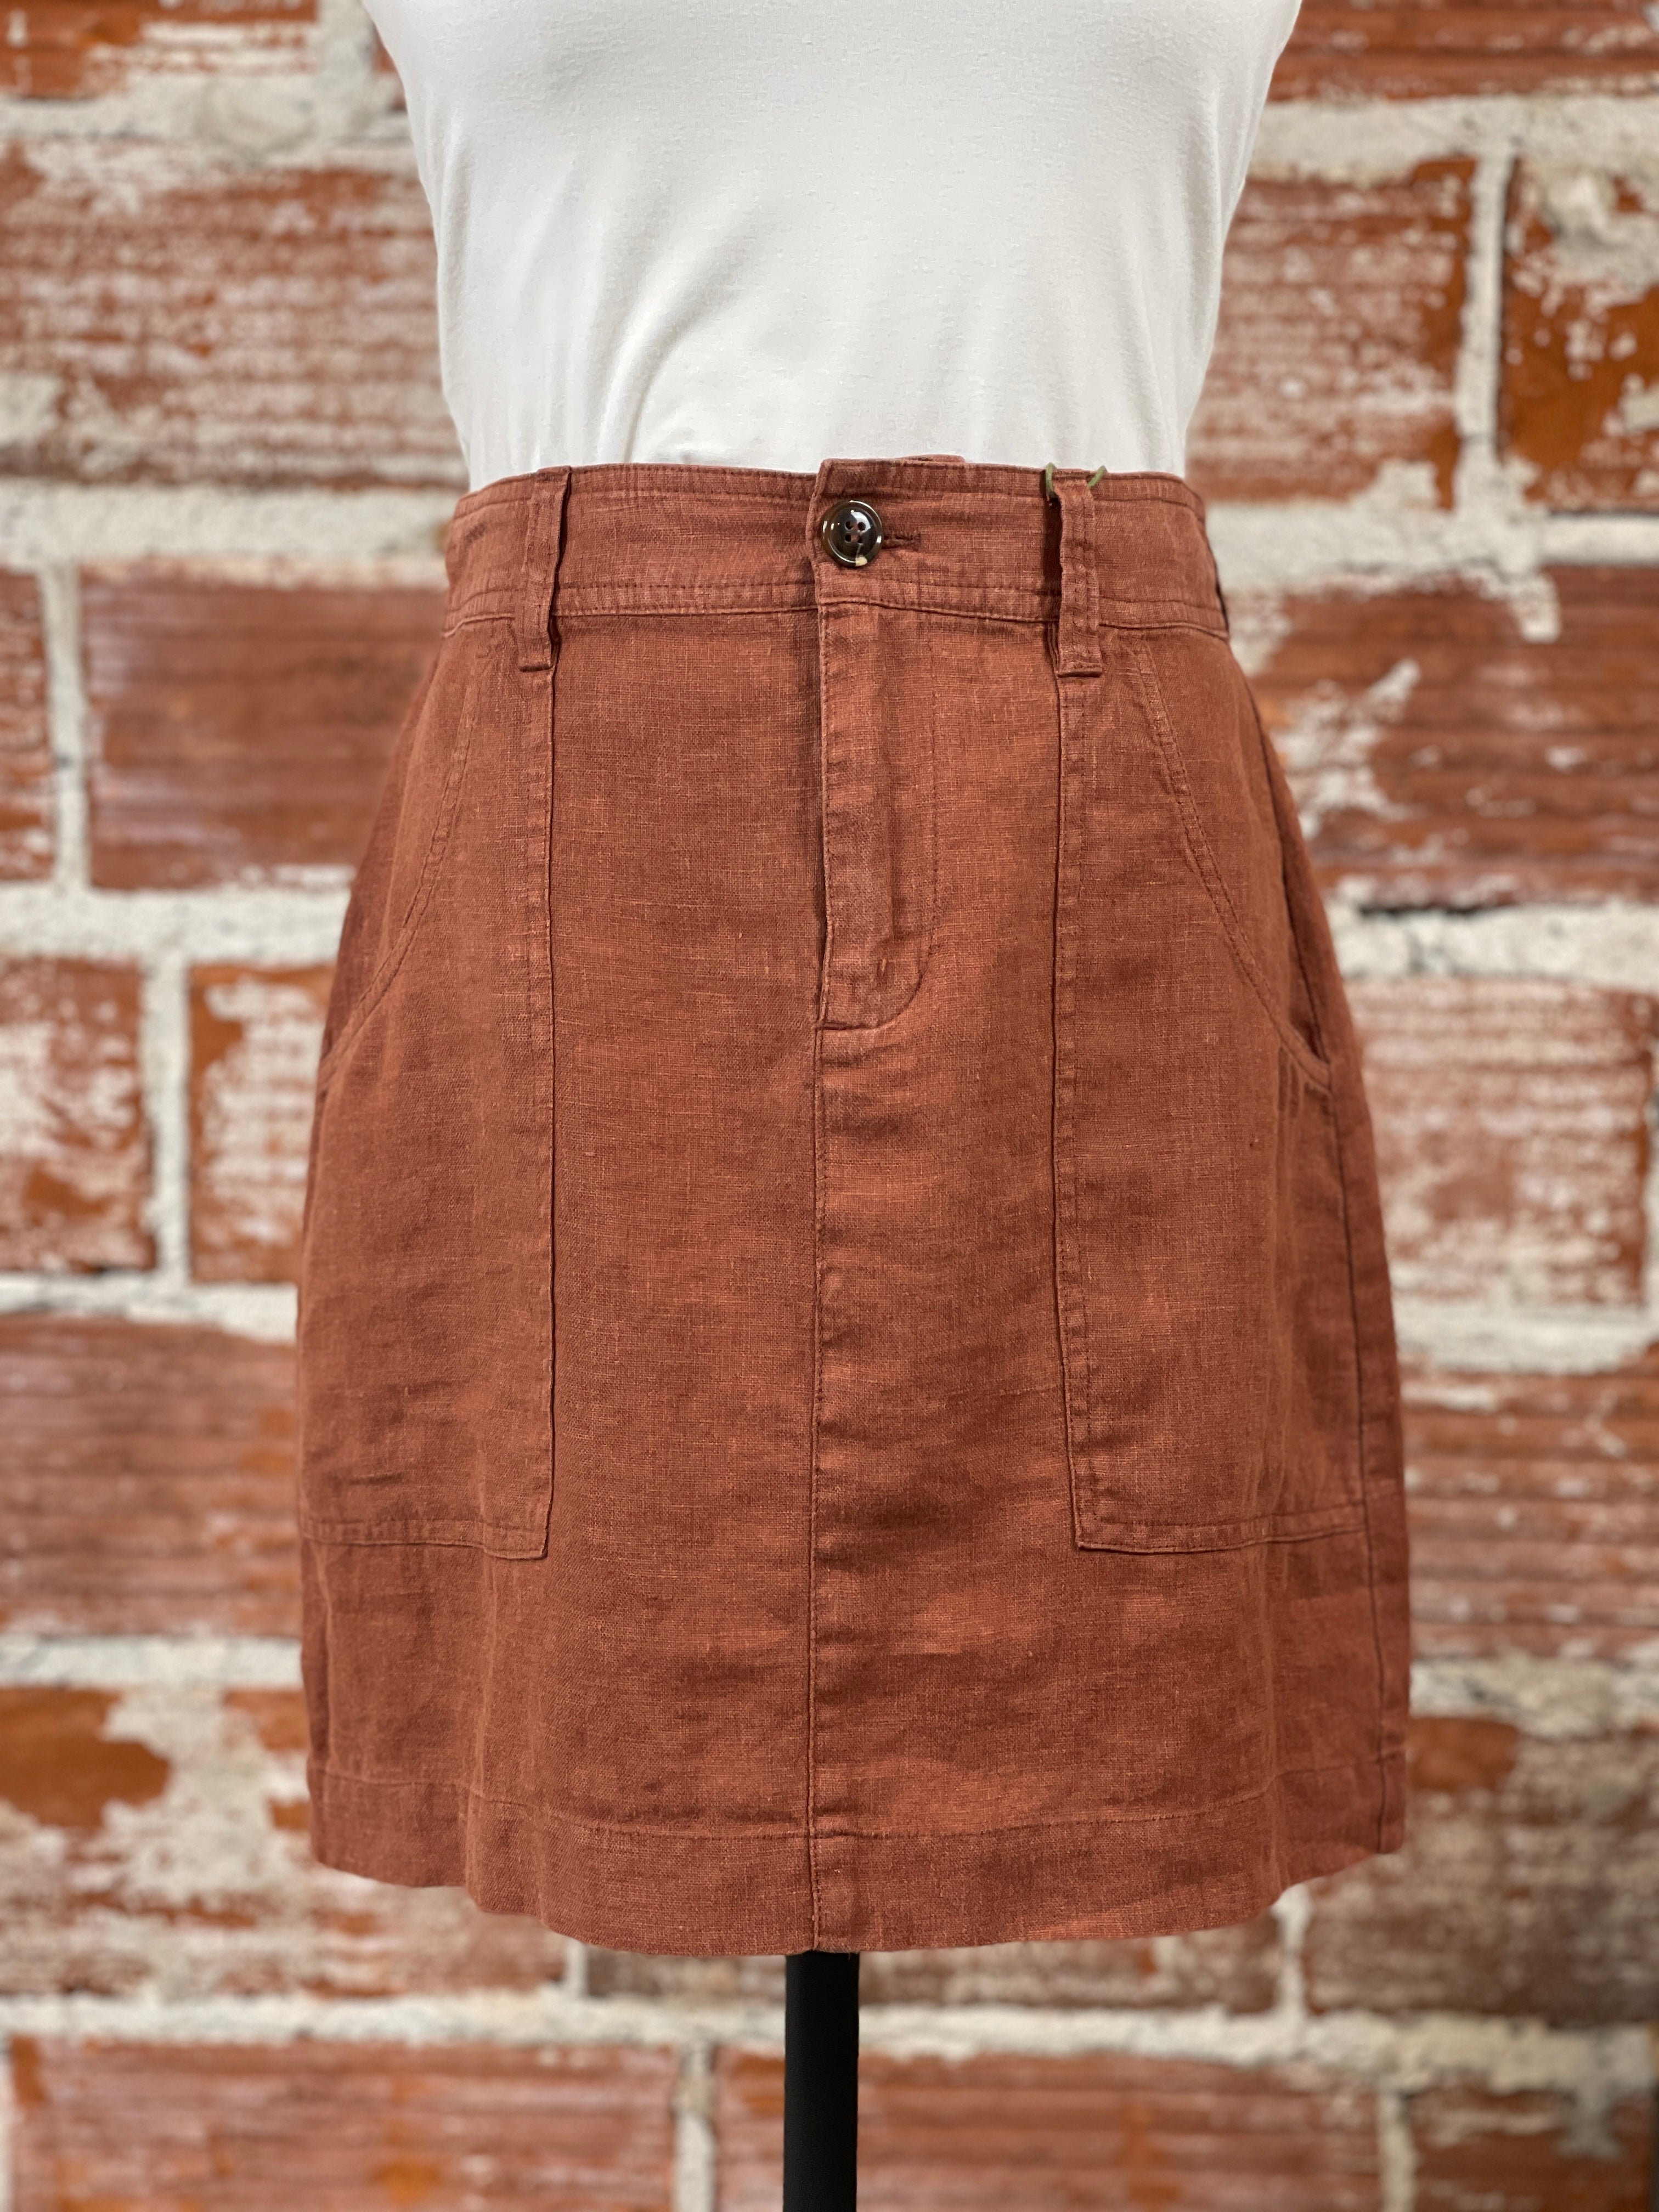 Sanctuary Surplus Linen Skirt in Rich Clay-231 Skirts-Little Bird Boutique